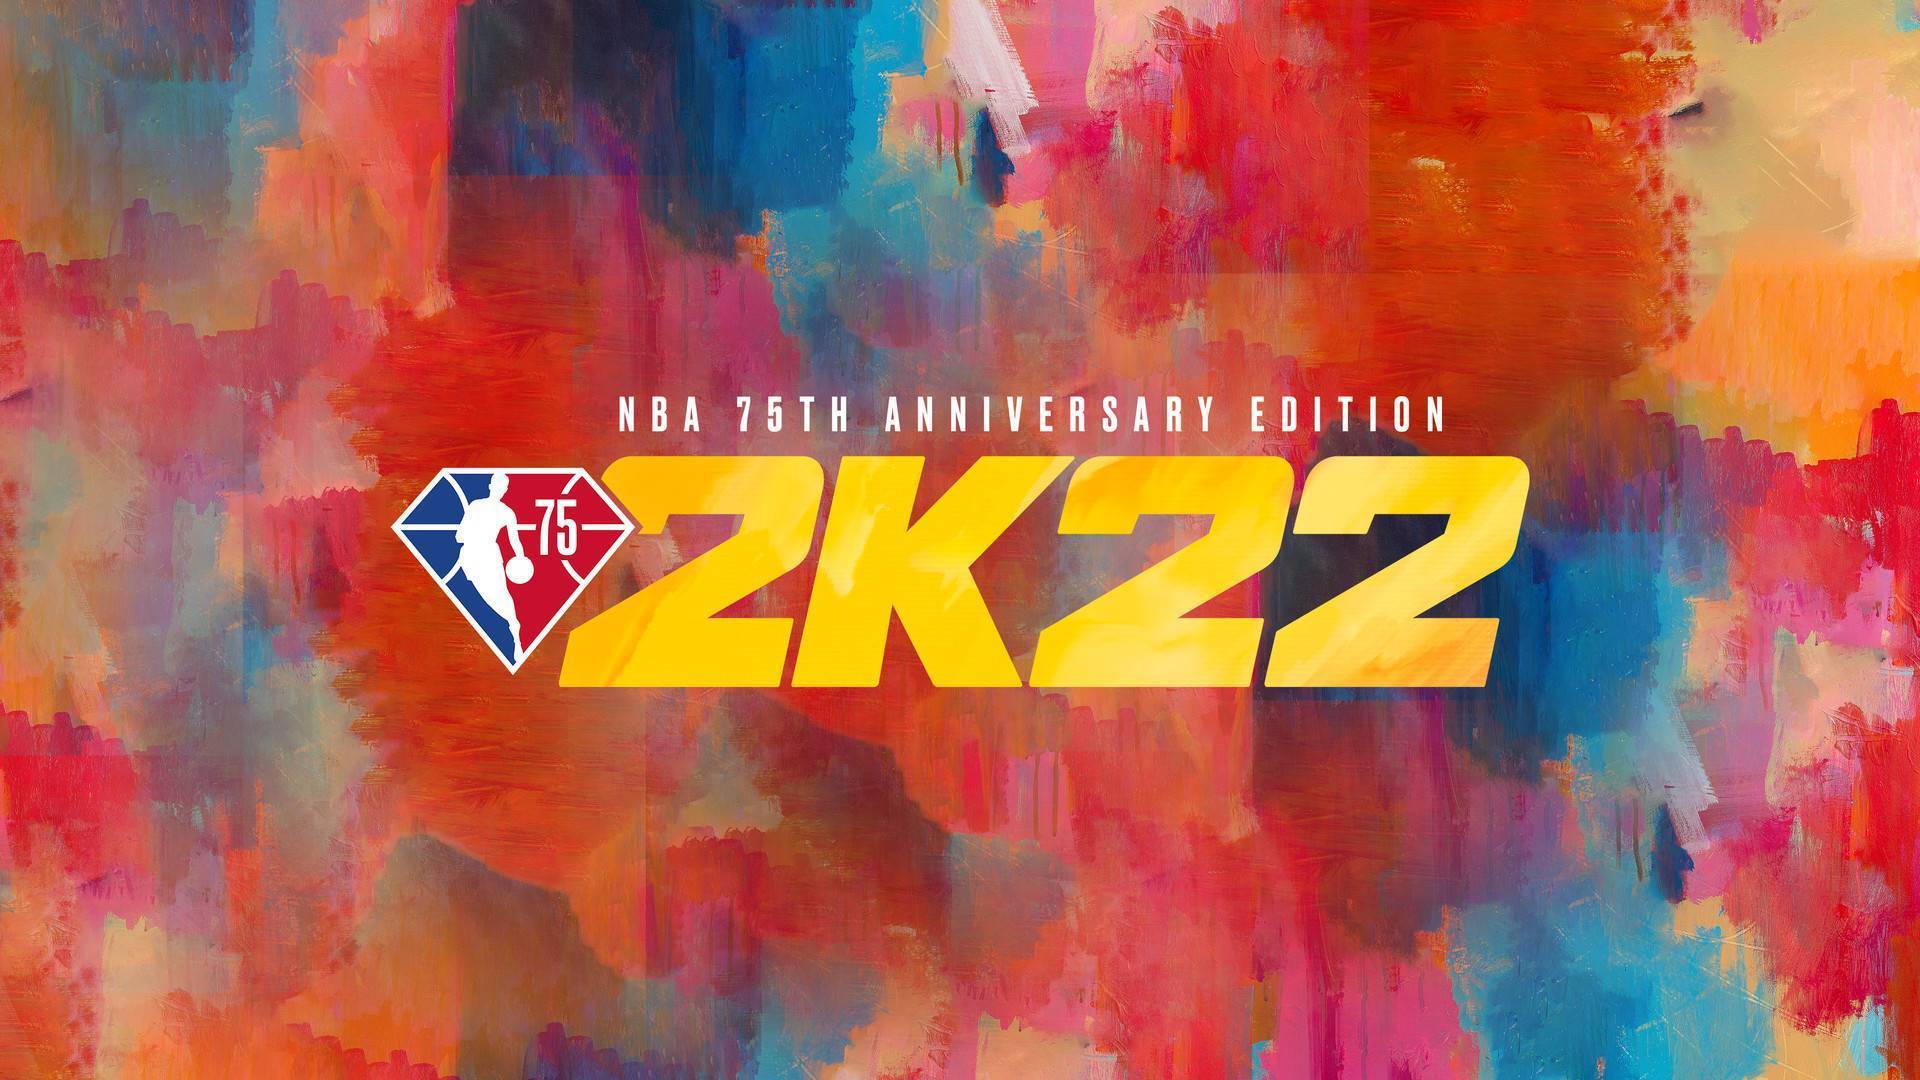 Buy NBA 2K22 Steam